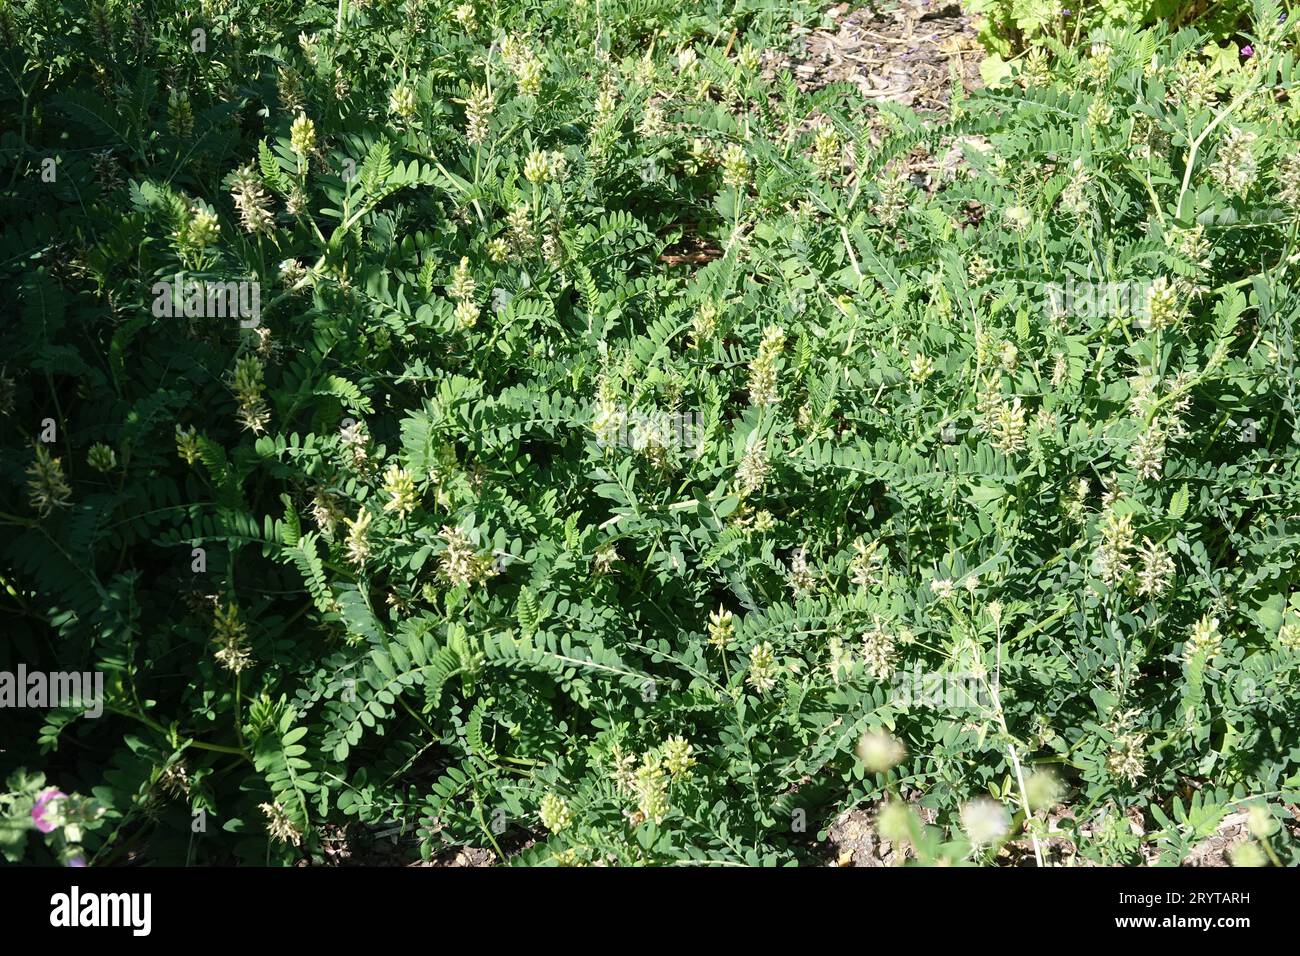 Gum Tragacanth / Gund Katira (Astragalus Gummifera)